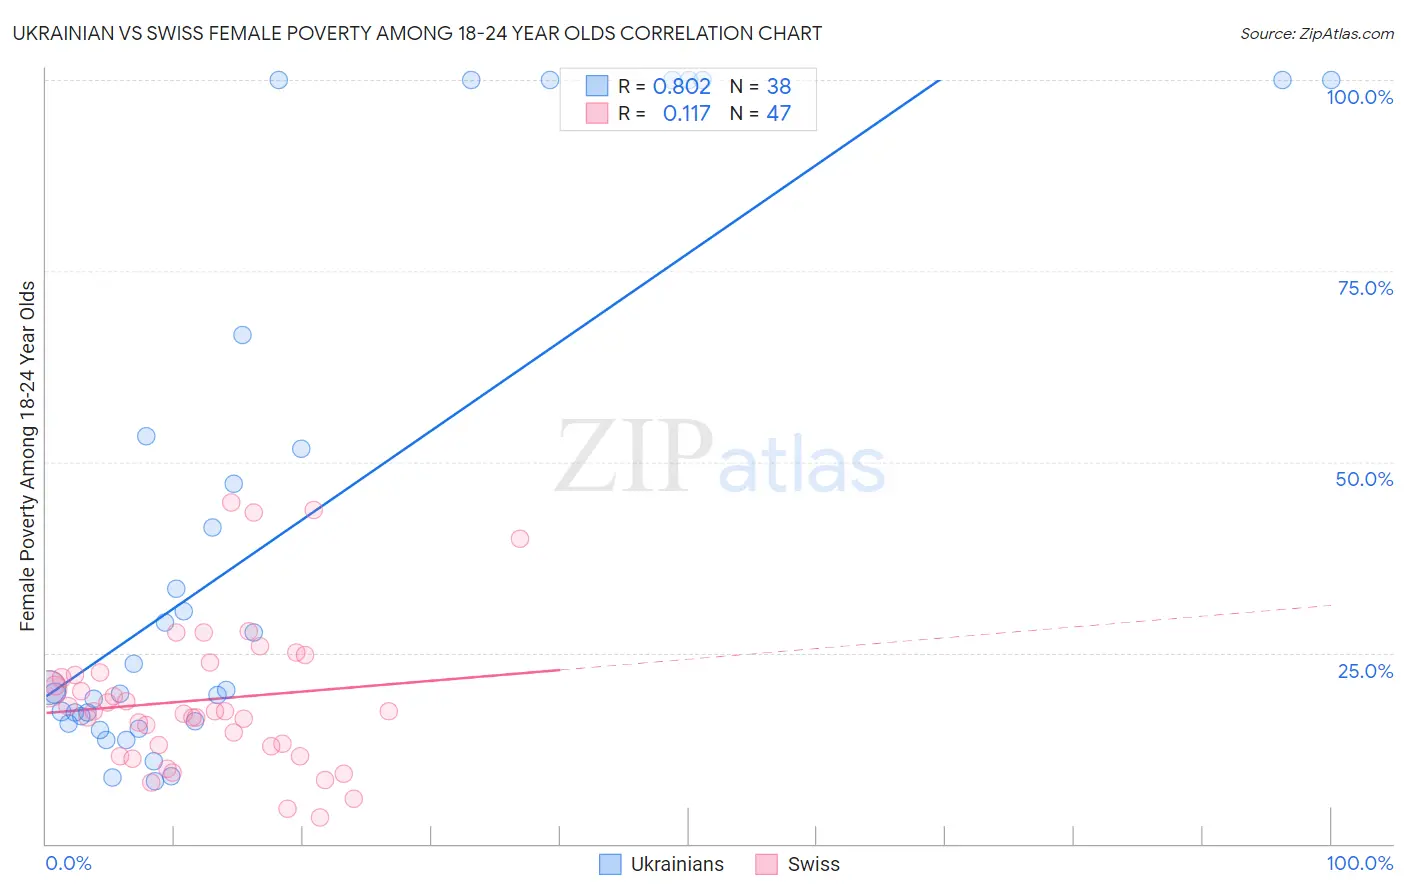 Ukrainian vs Swiss Female Poverty Among 18-24 Year Olds